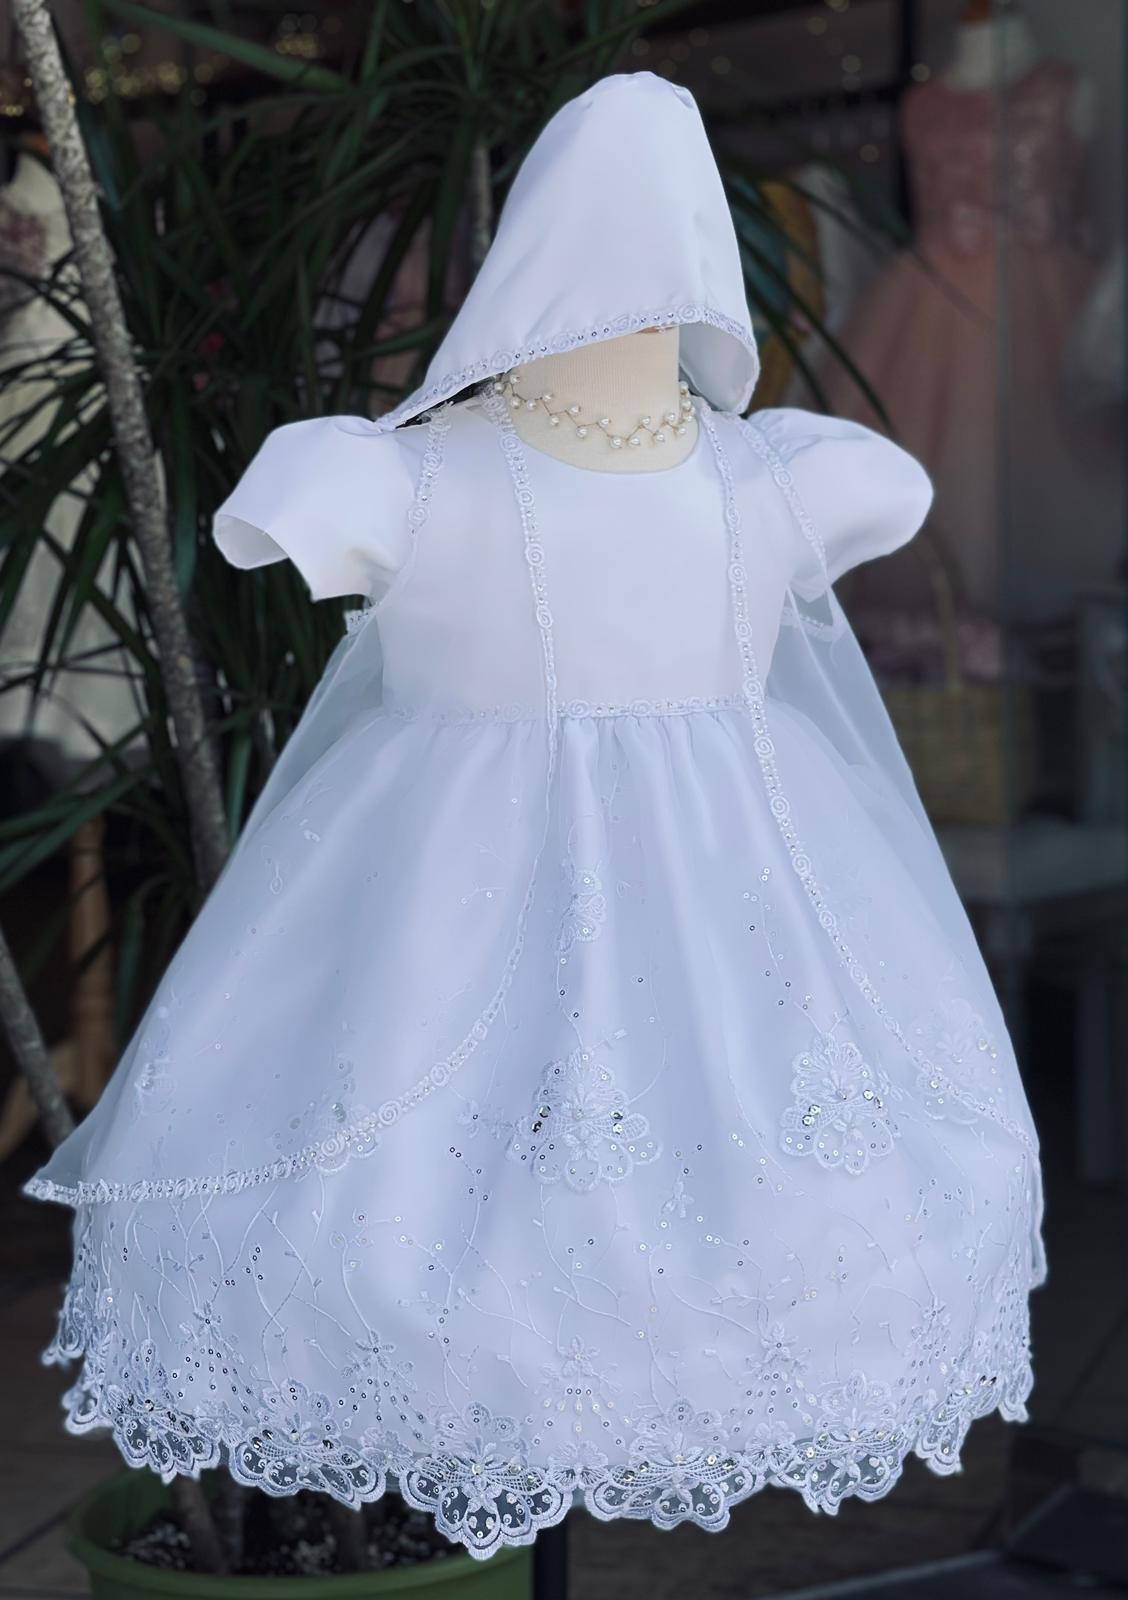 Florentine's Baptism Dress